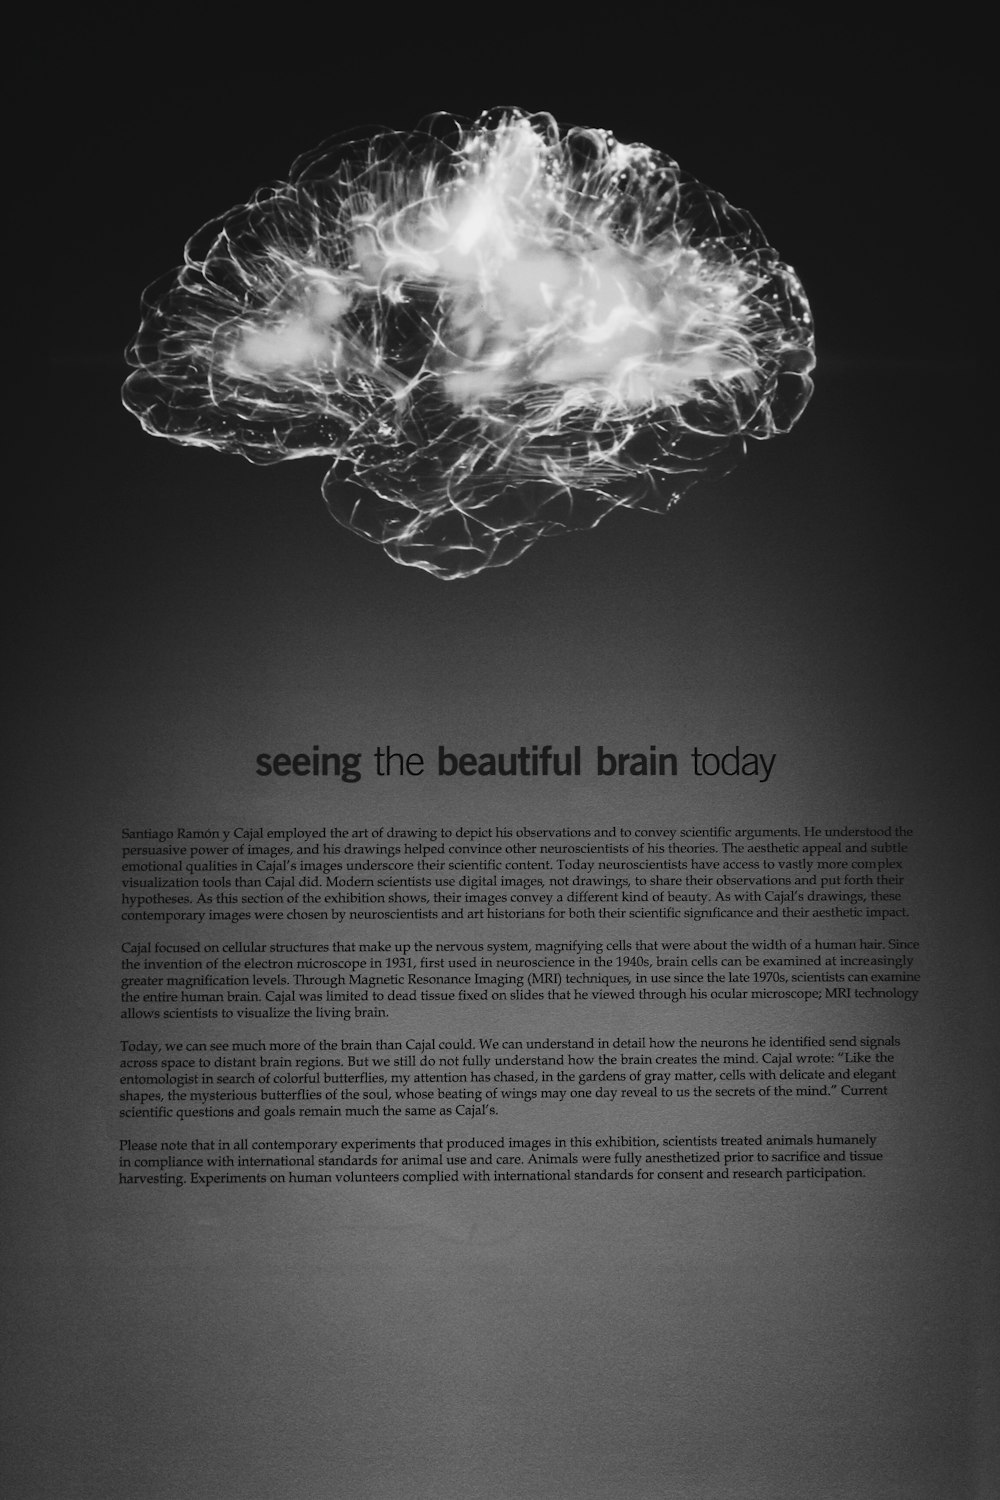 brain wallpaper white